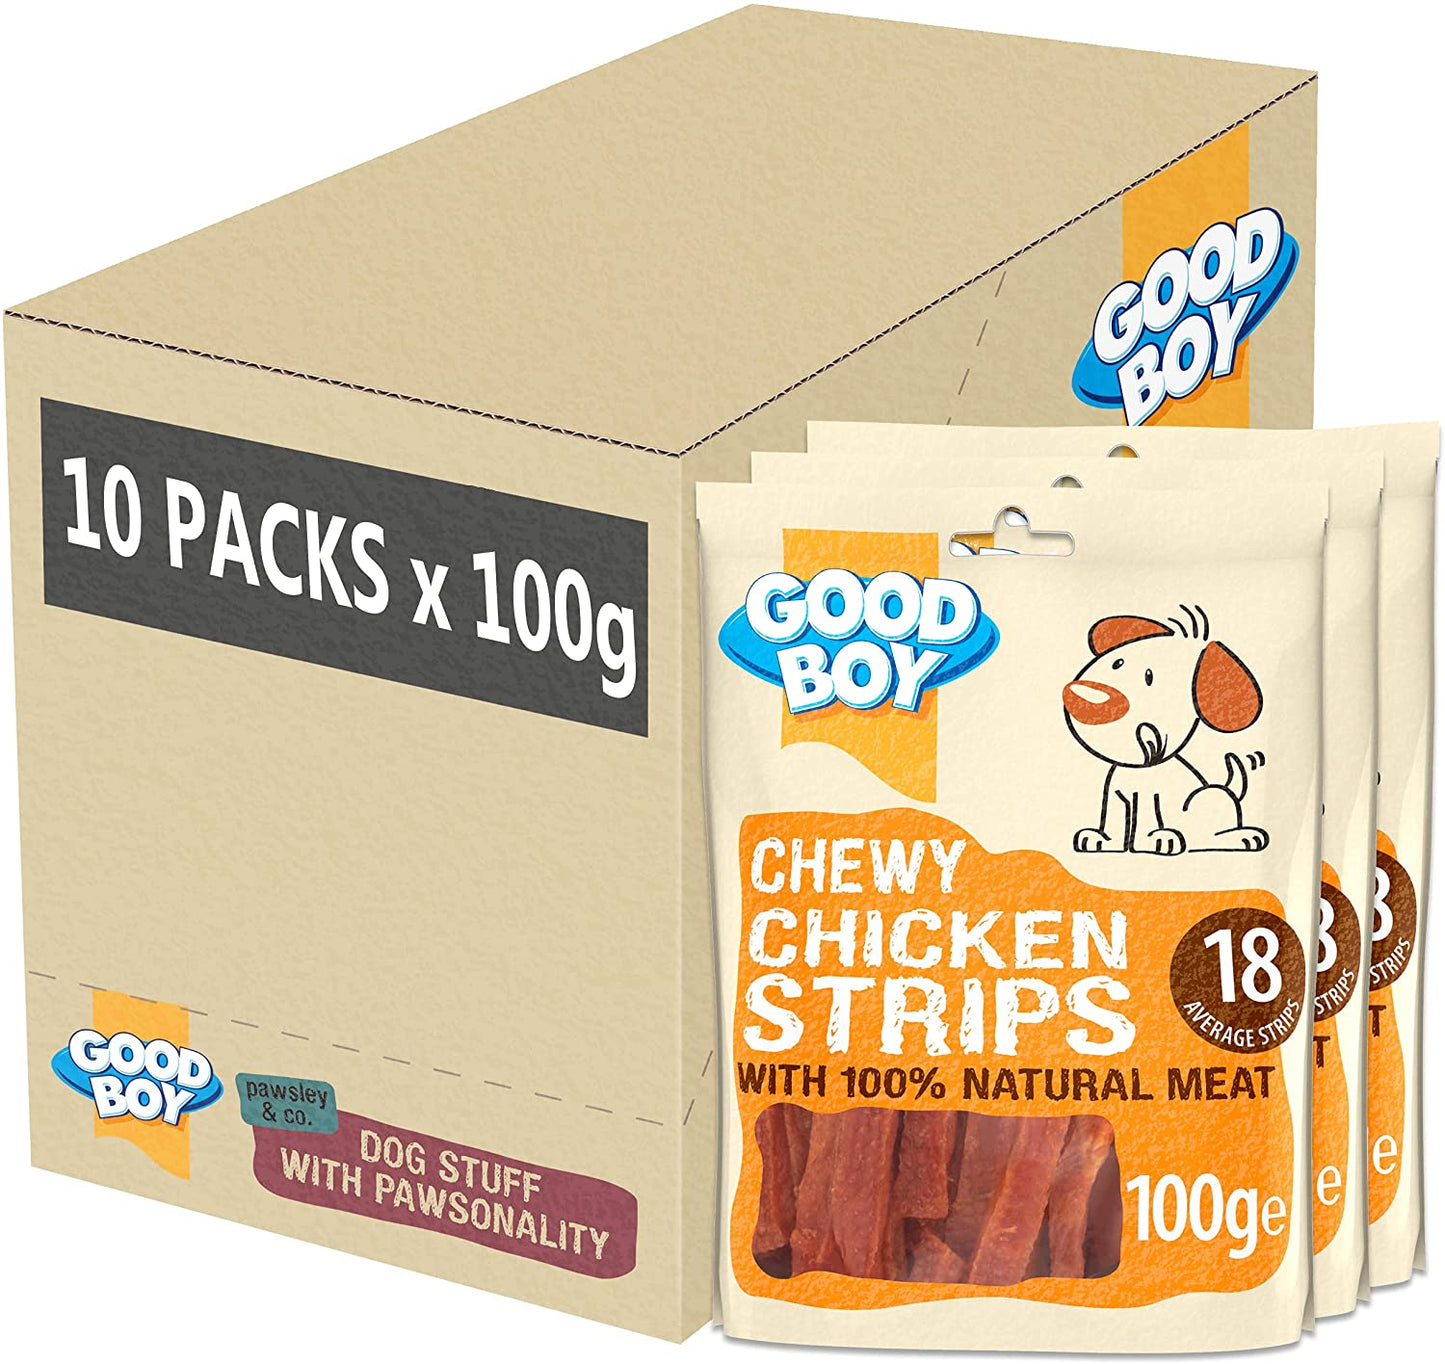 Good Boy - Chewy Chicken Strips (100g)